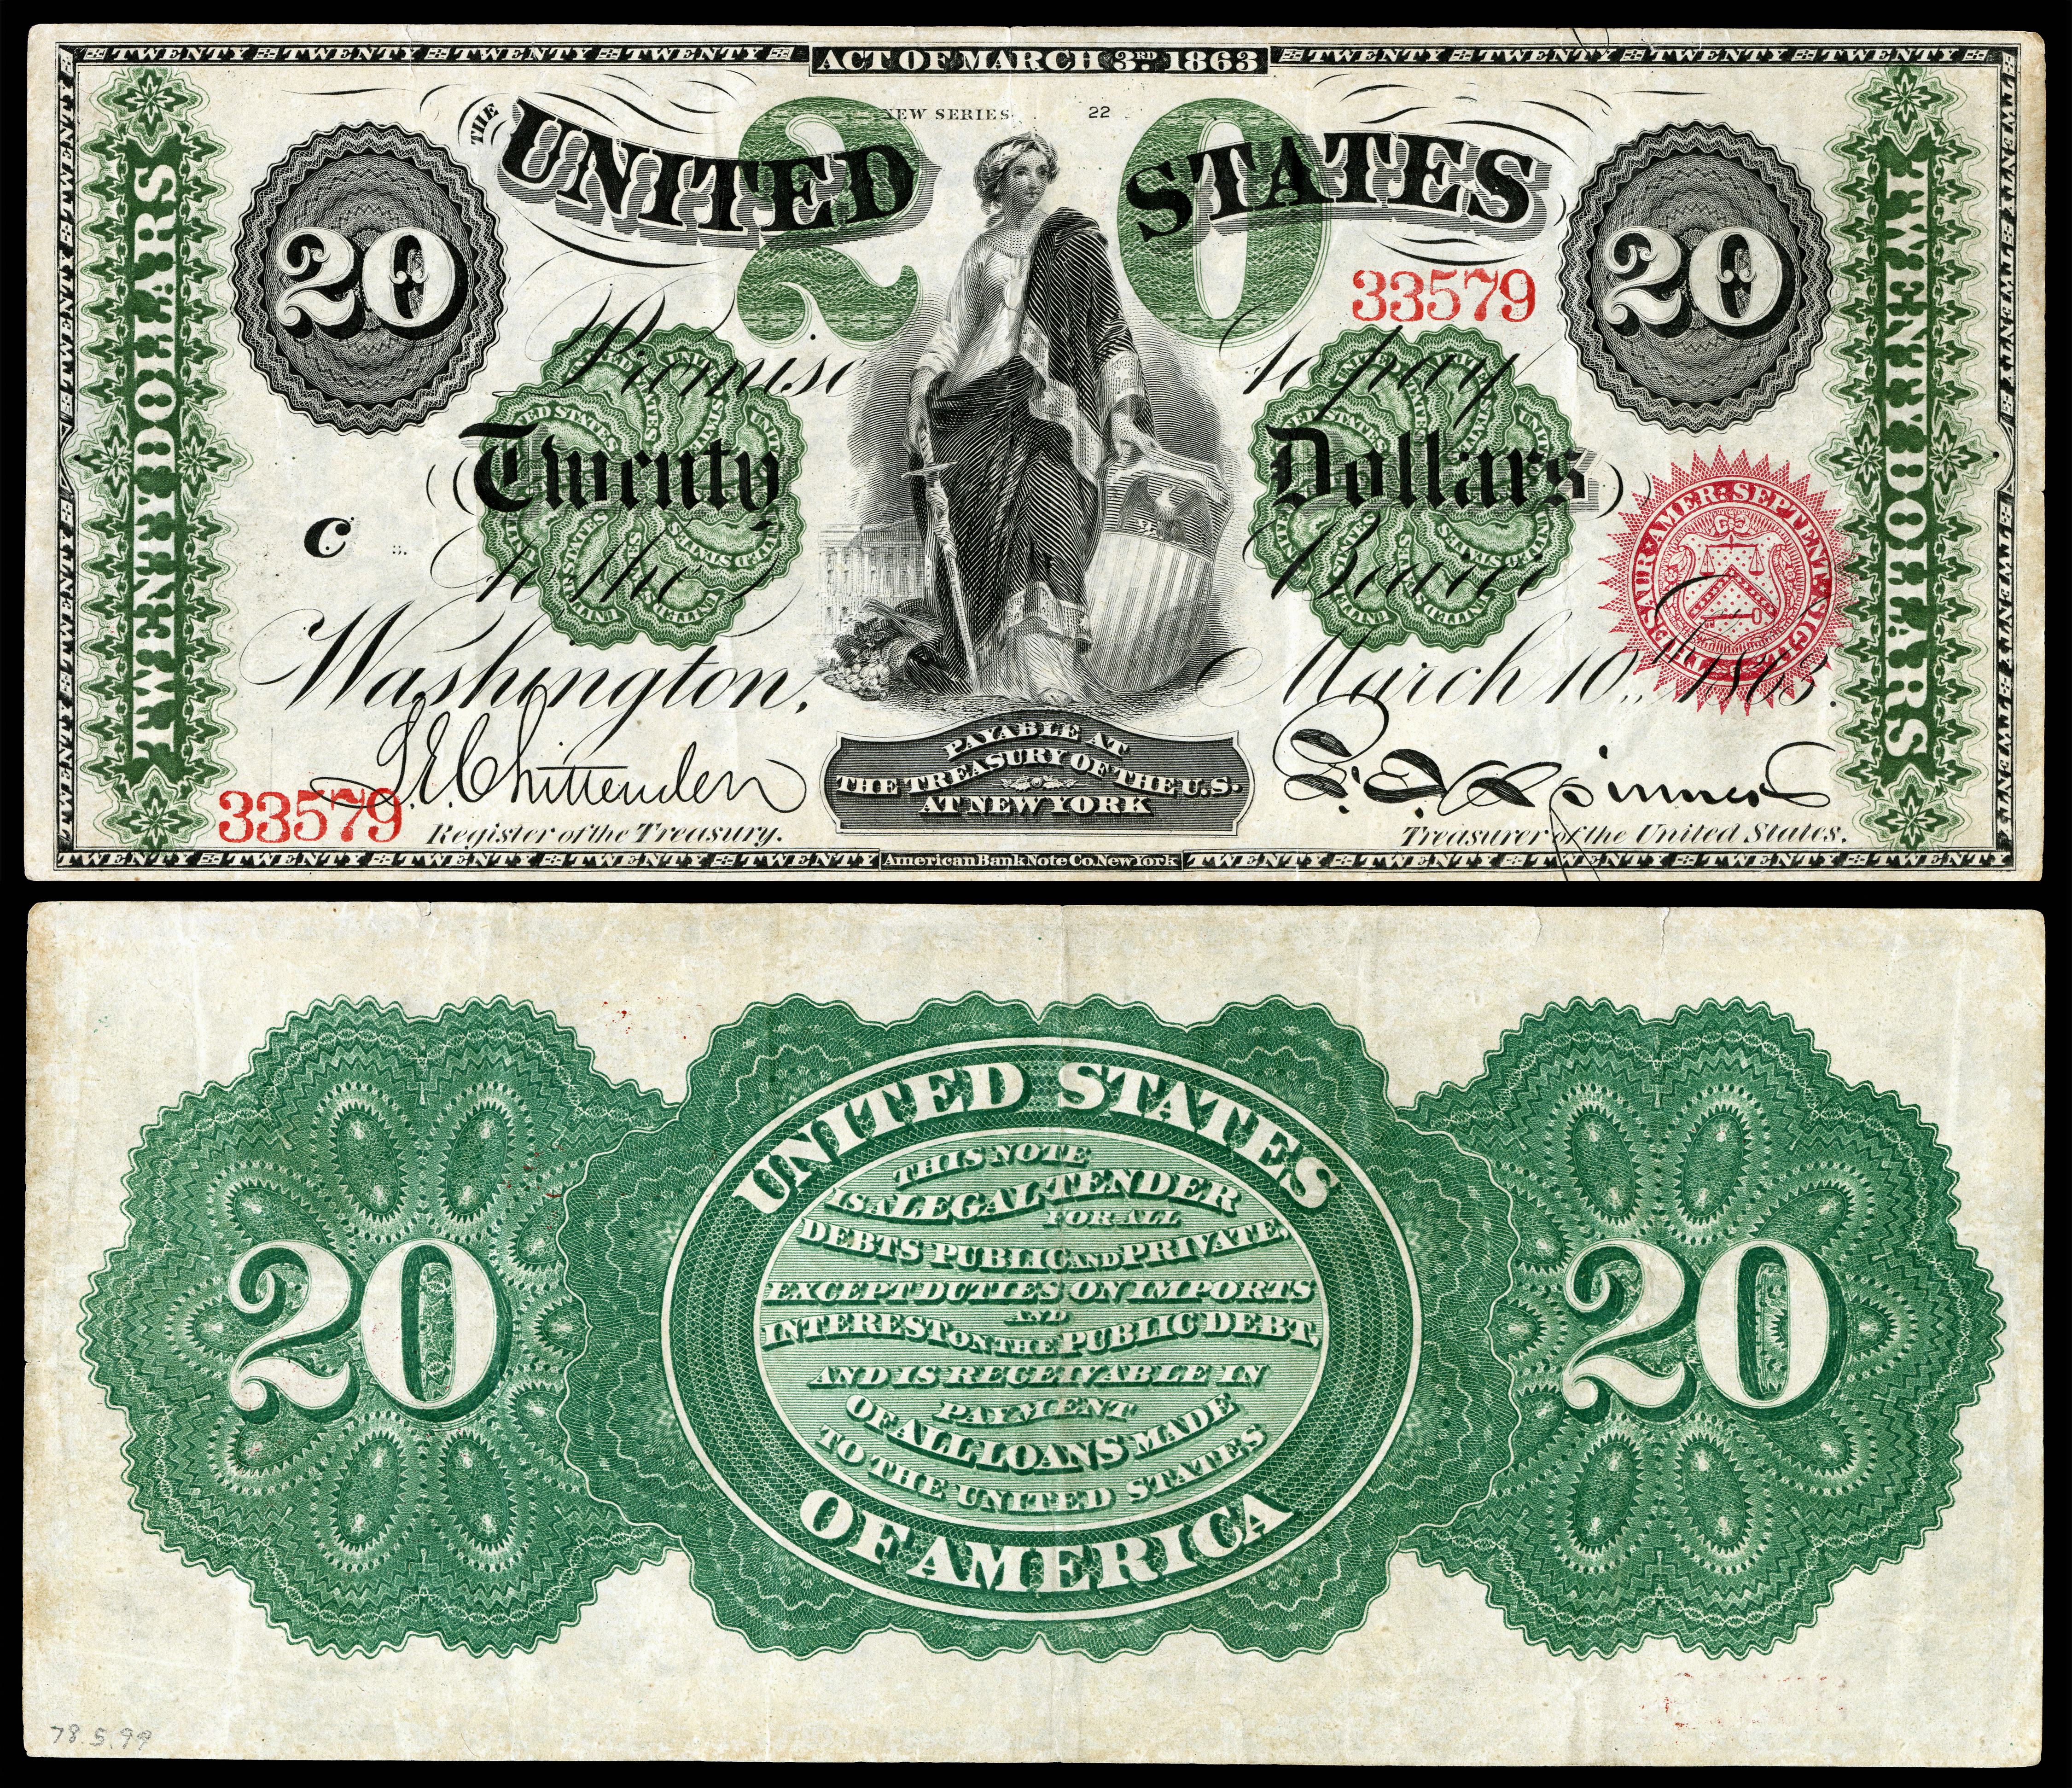 United States twenty-dollar bill - Wikipedia